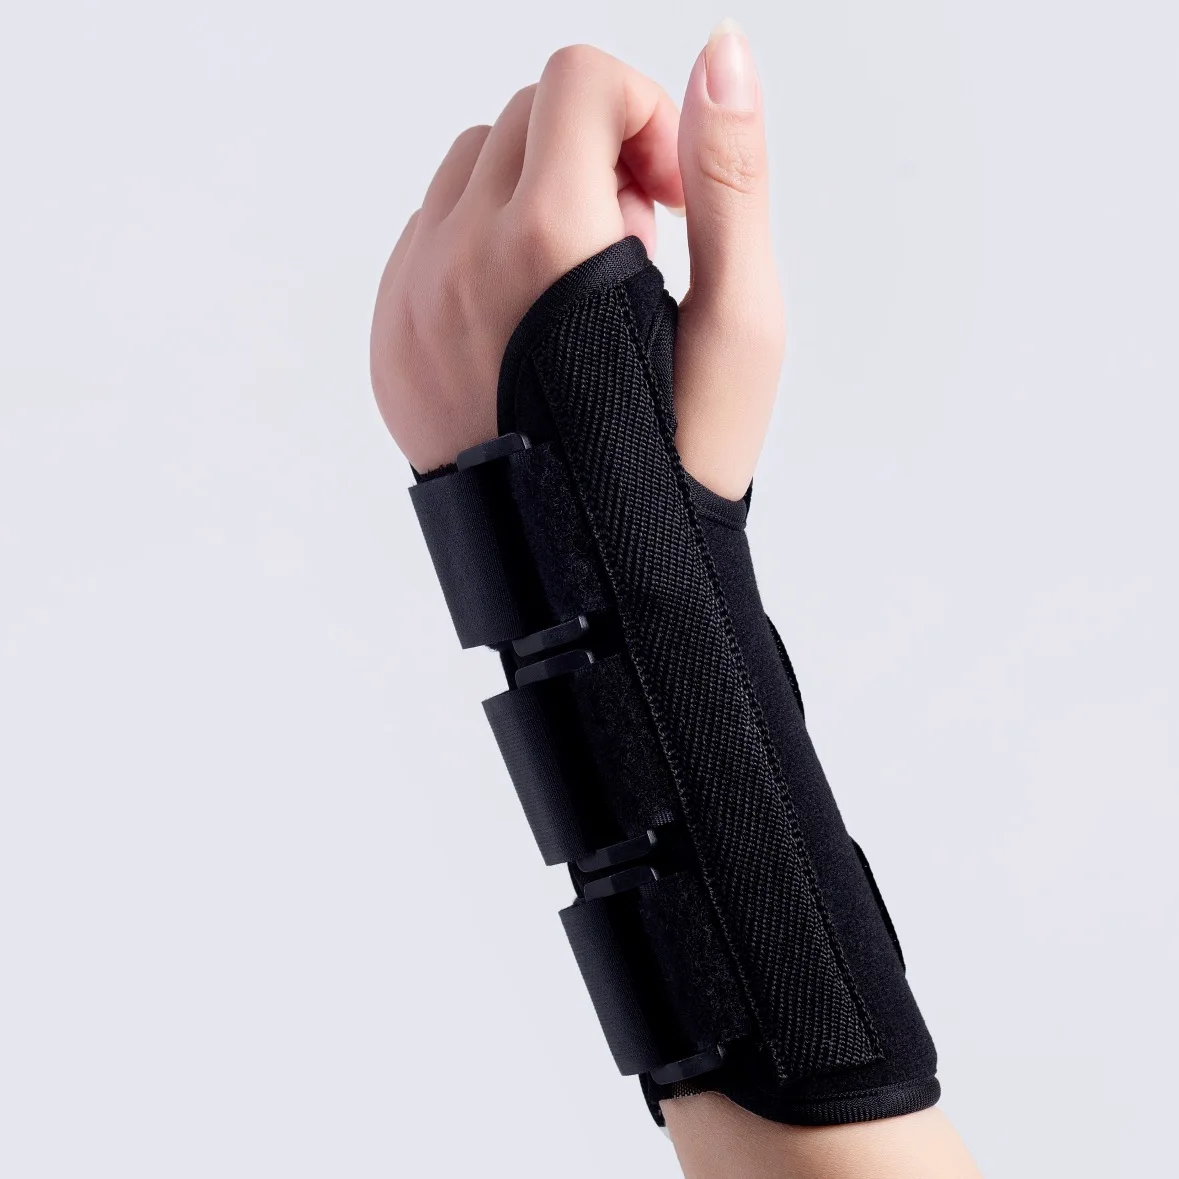 

1Pc Wrist Guard Support Brace for Carpal Tunnel Pain Relief Night Protector Arthritis Sprain Adjustable Splint Strap Bandage